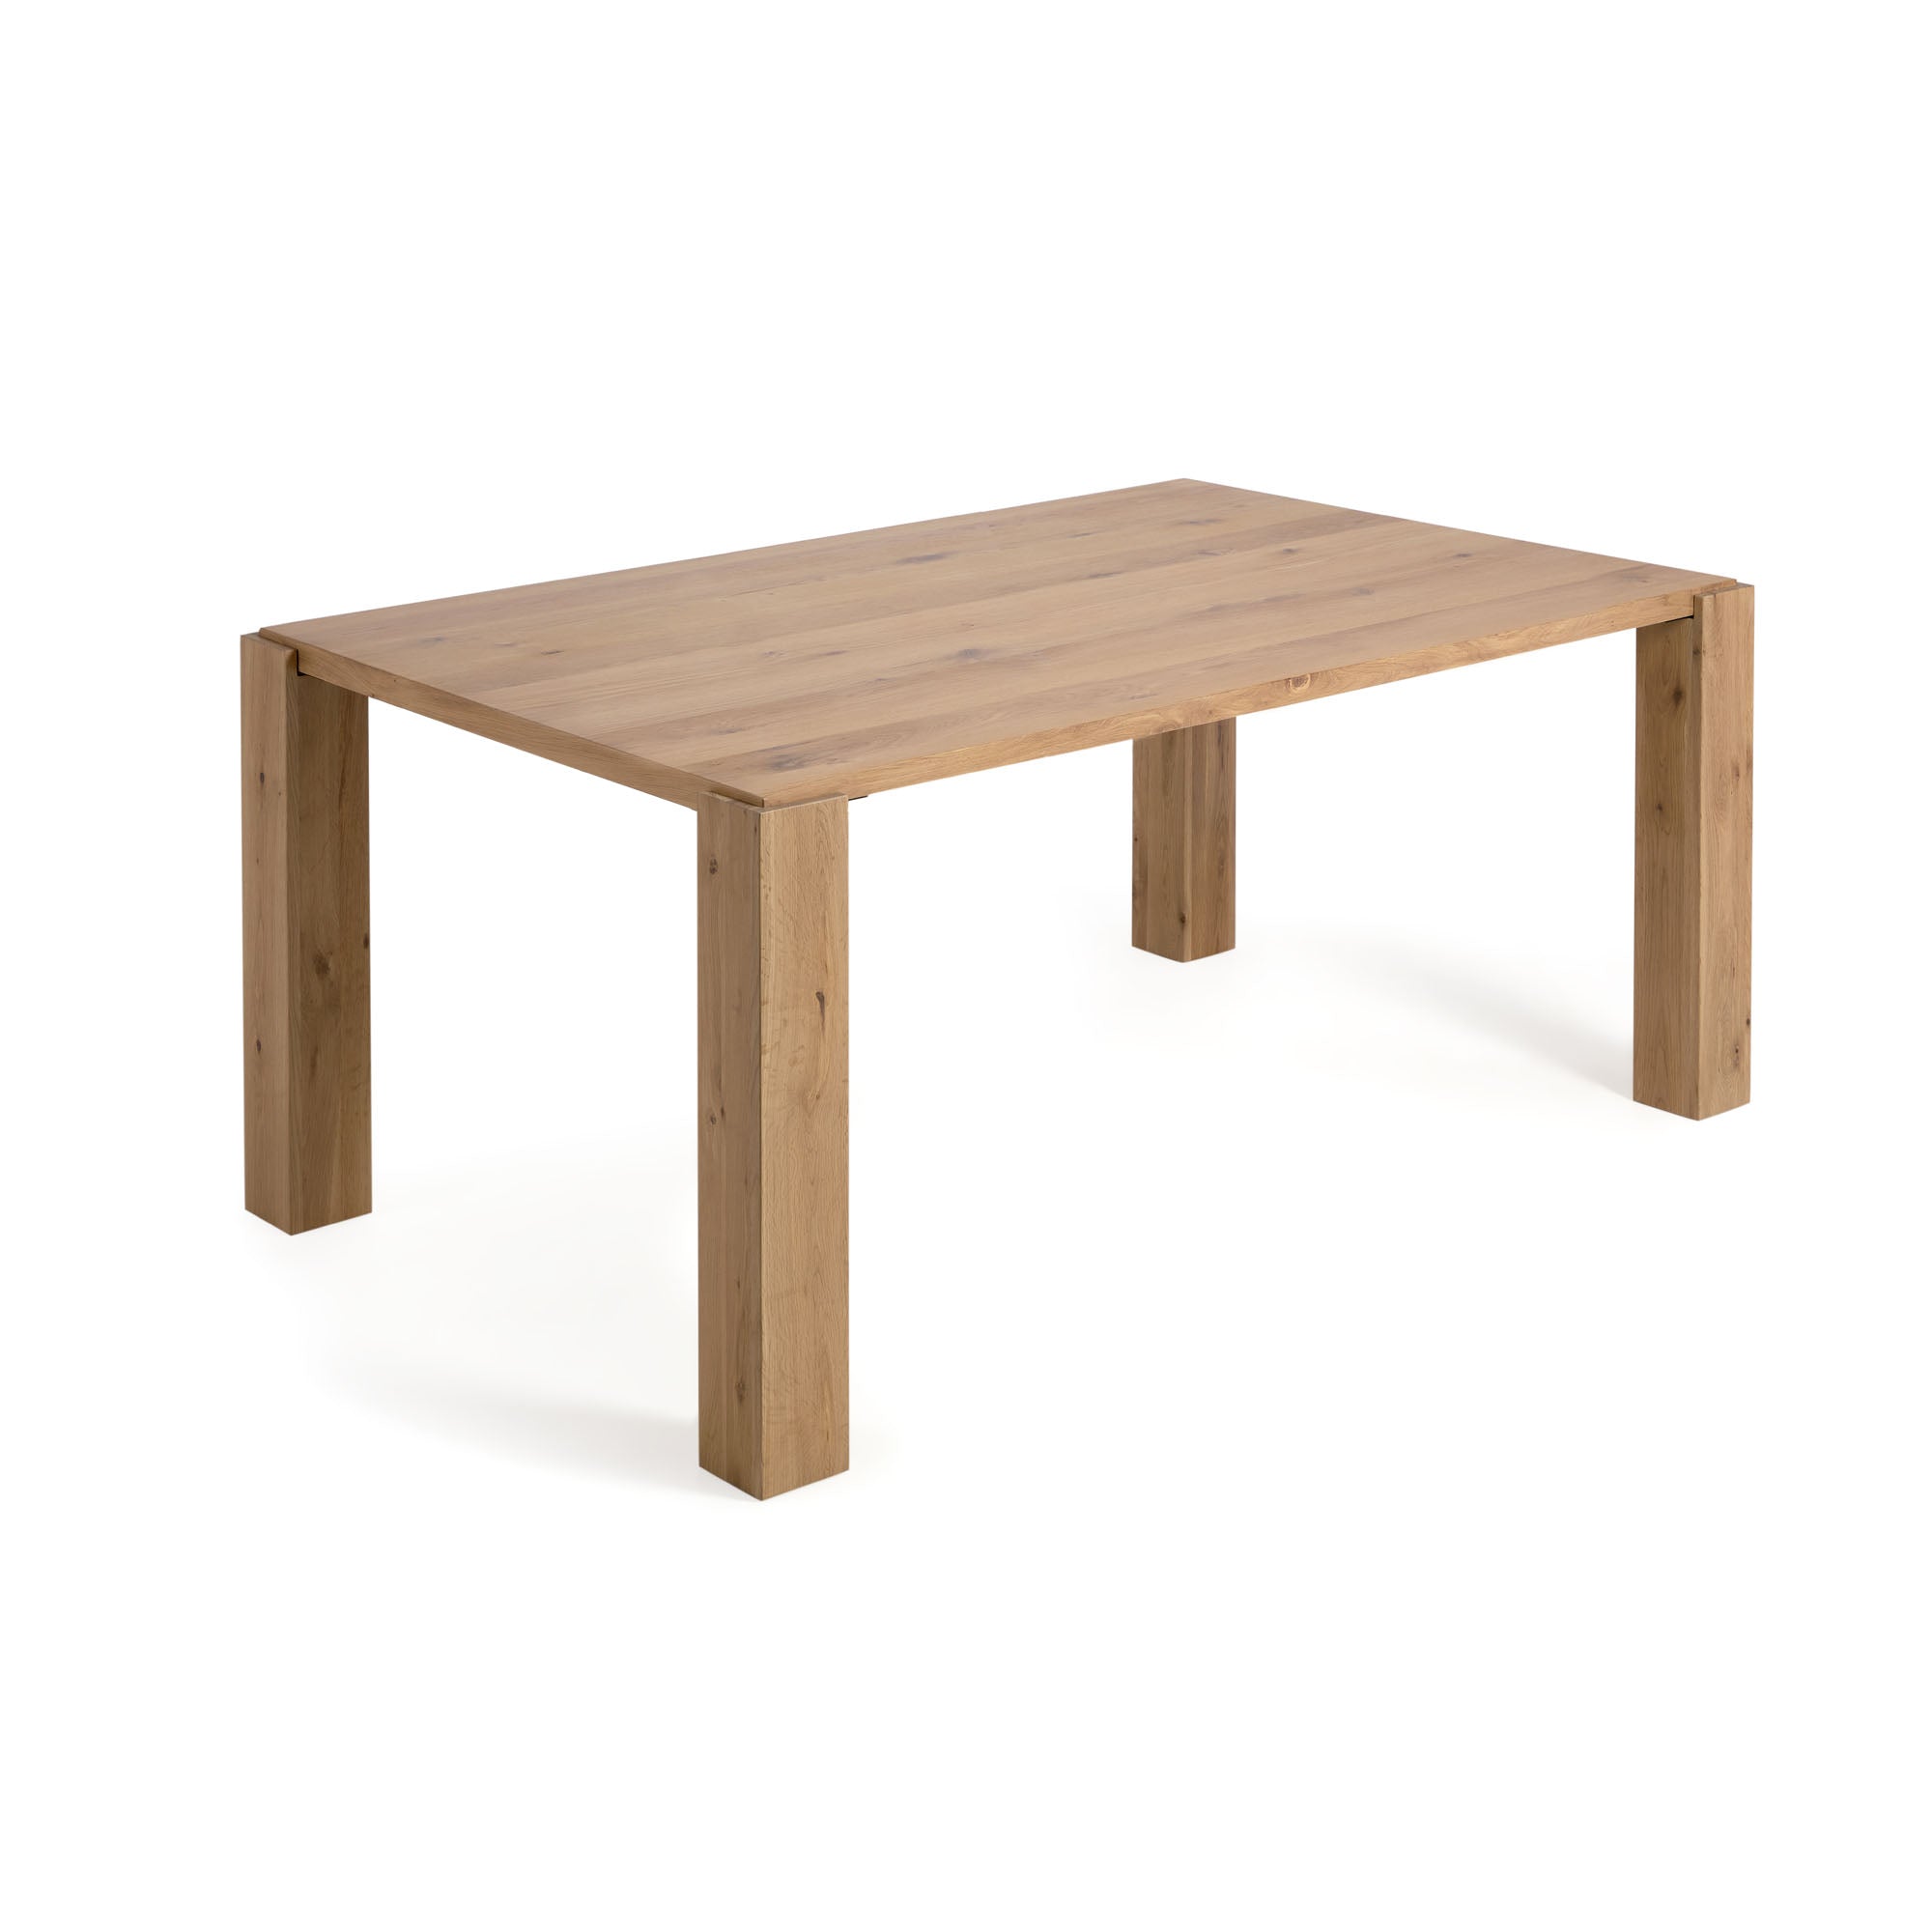 Deyanira table with oak veneer and solid oak legs 160 x 90 cm